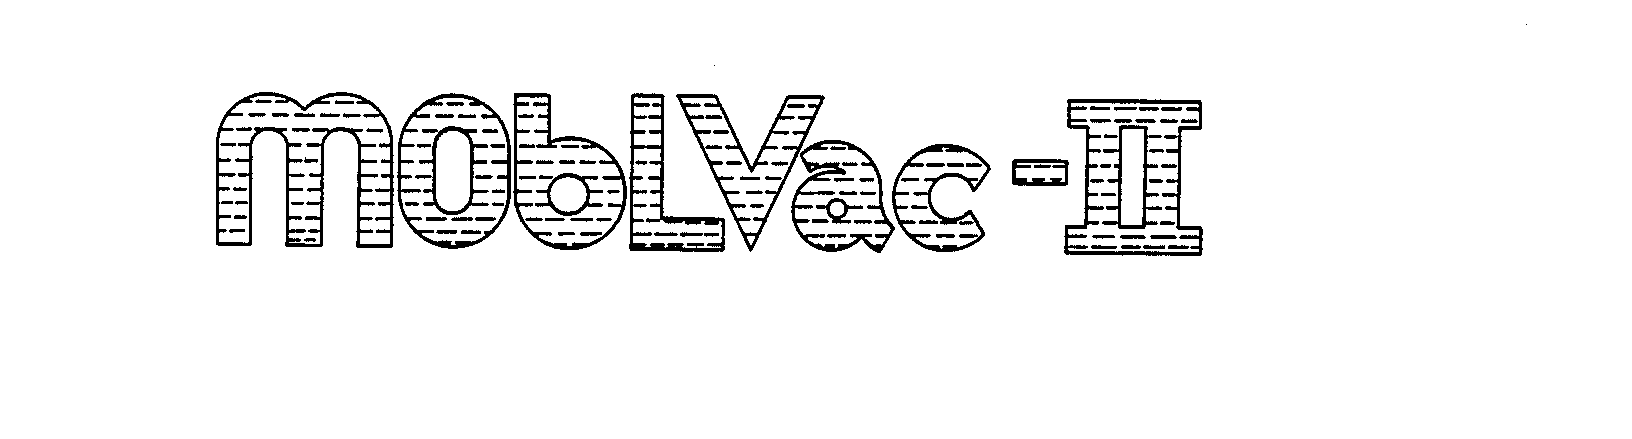  MOBLVAC-II